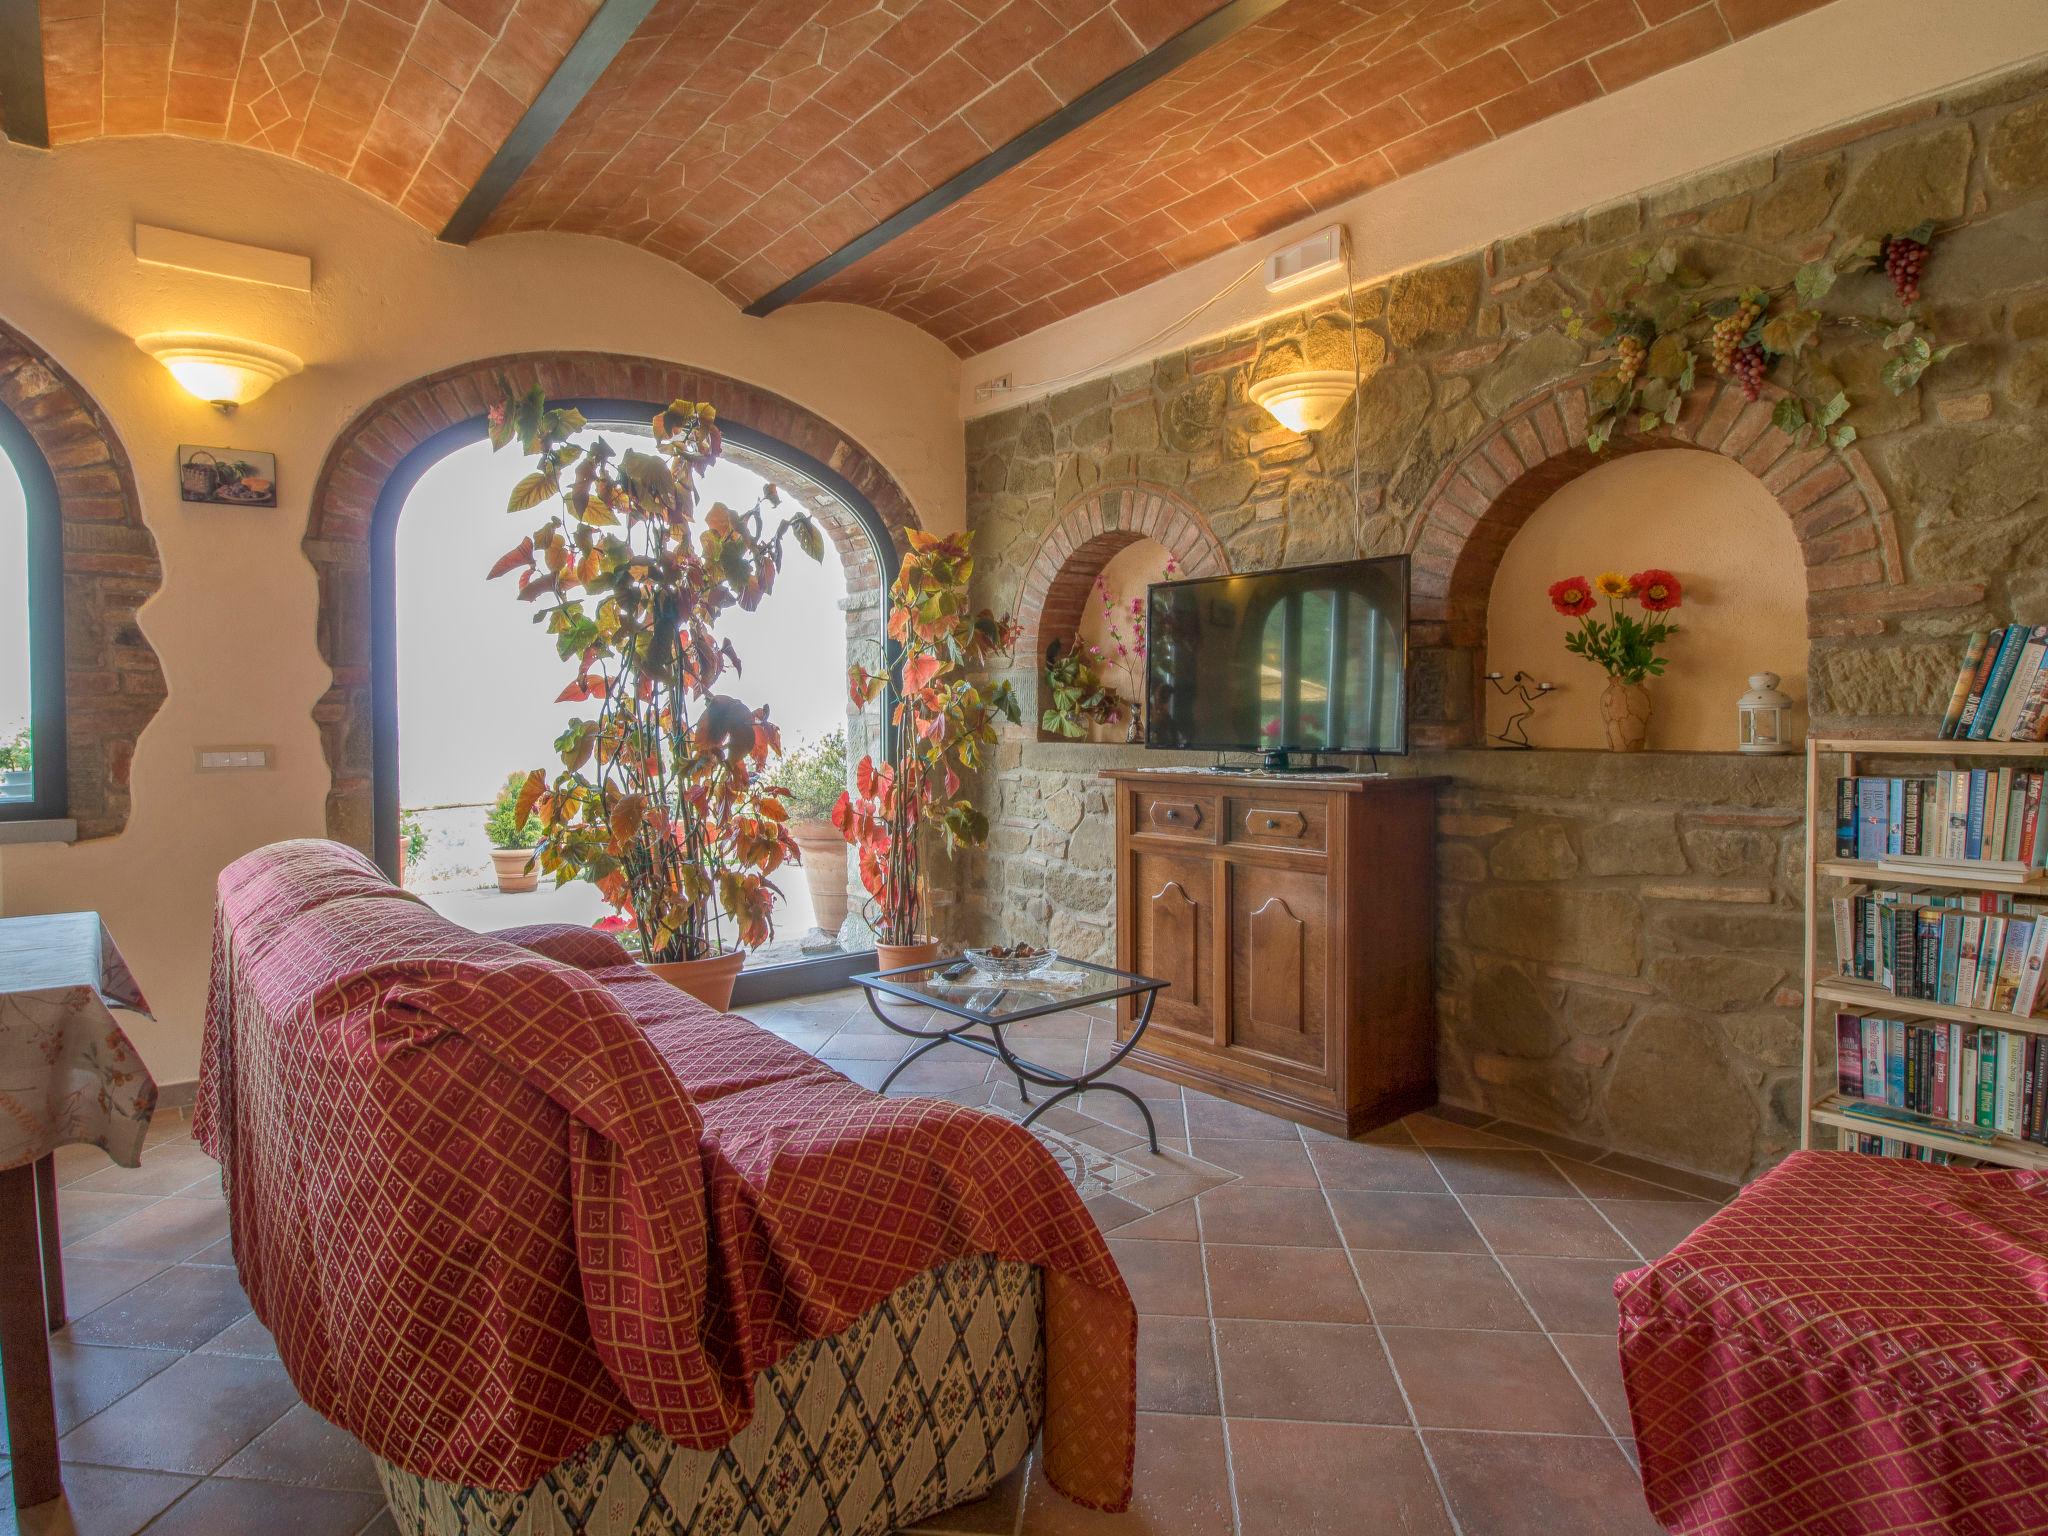 Photo 7 - Maison de 5 chambres à Civitella in Val di Chiana avec piscine privée et terrasse